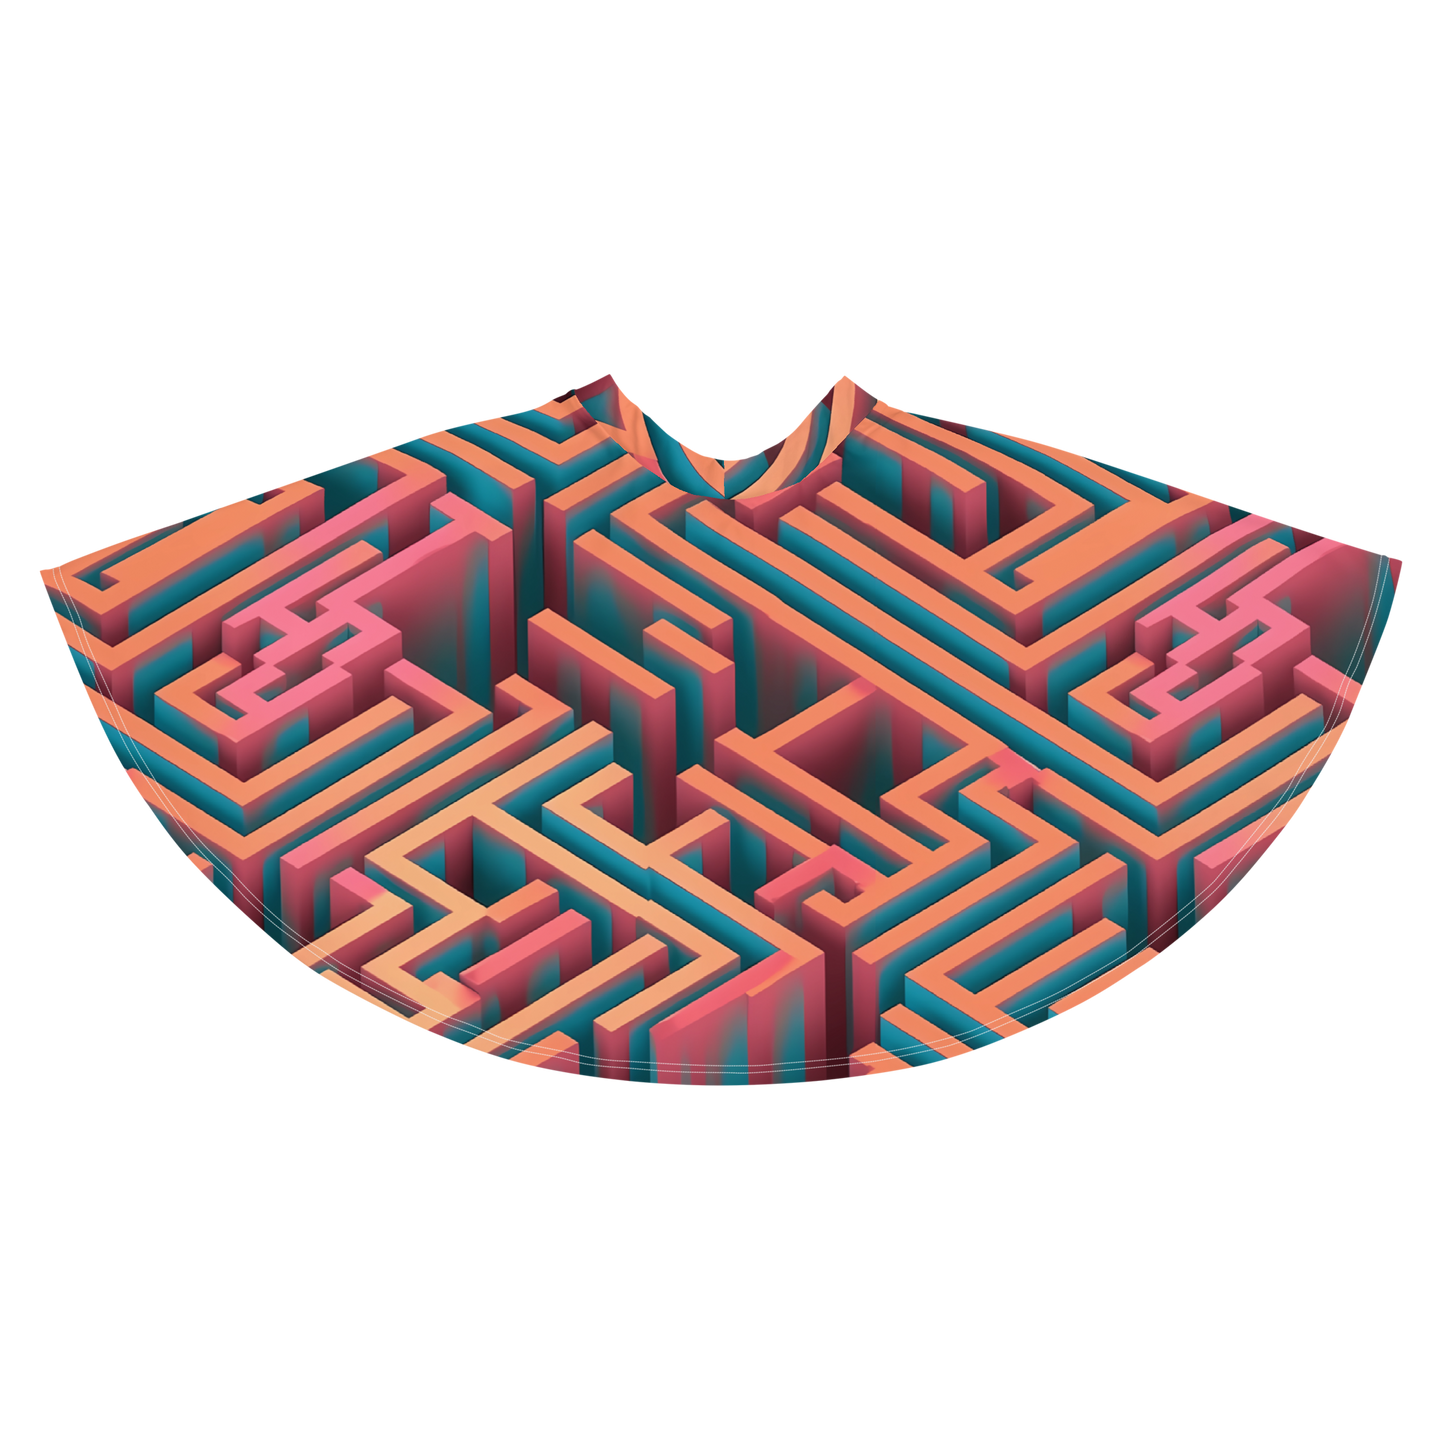 3D Maze Illusion | 3D Patterns | All-Over Print Skater Skirt - #1